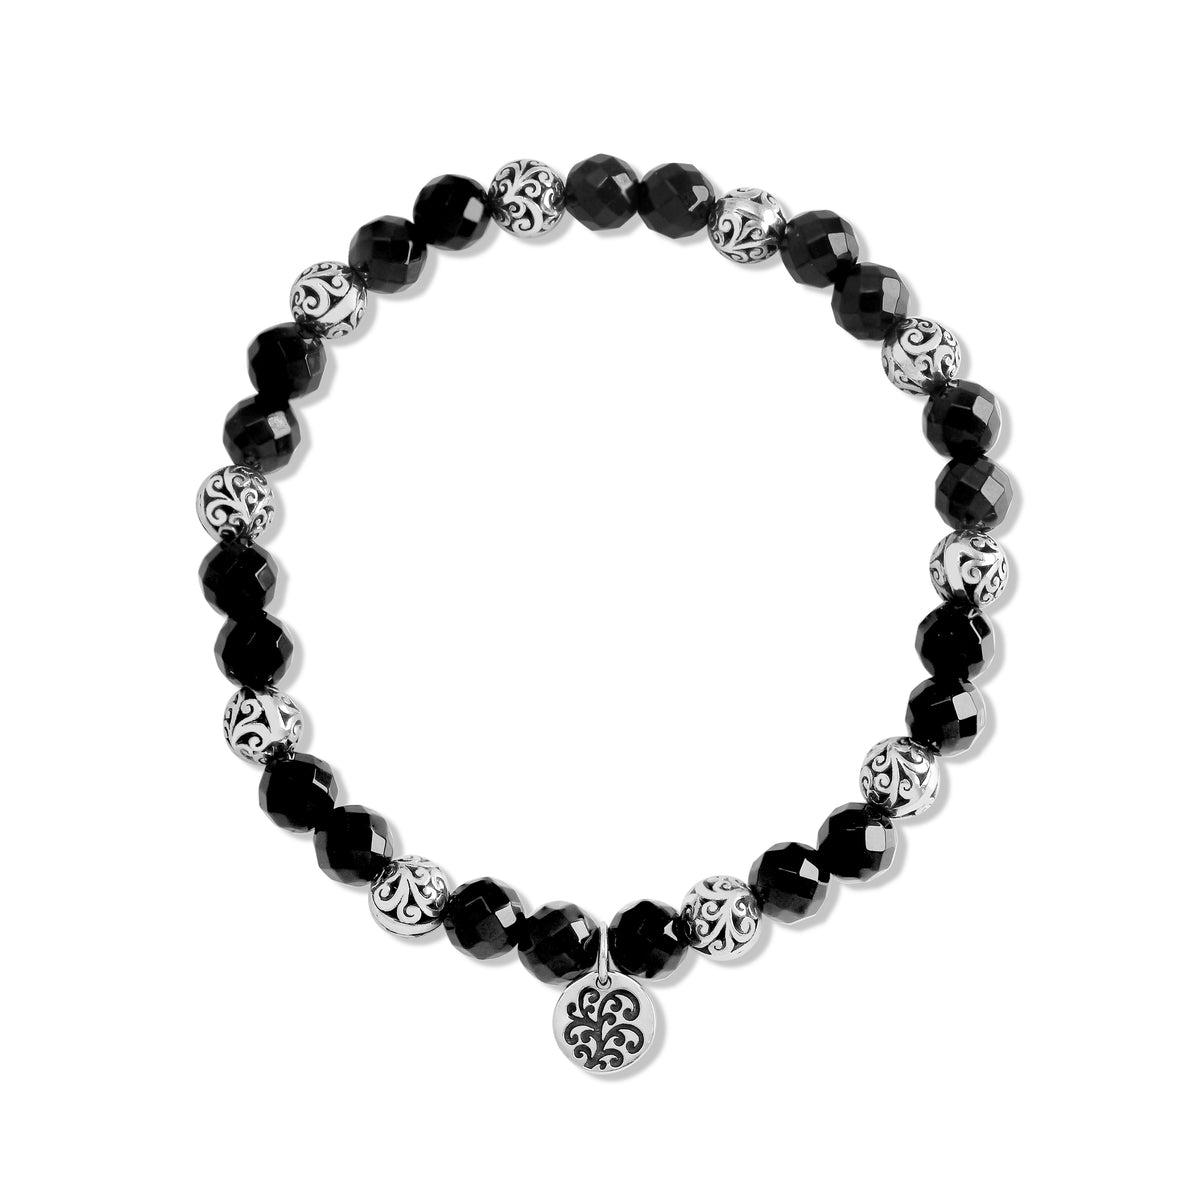 Black Onyx (6mm) & LH Scroll Every Two Beads Stretch Bracelet